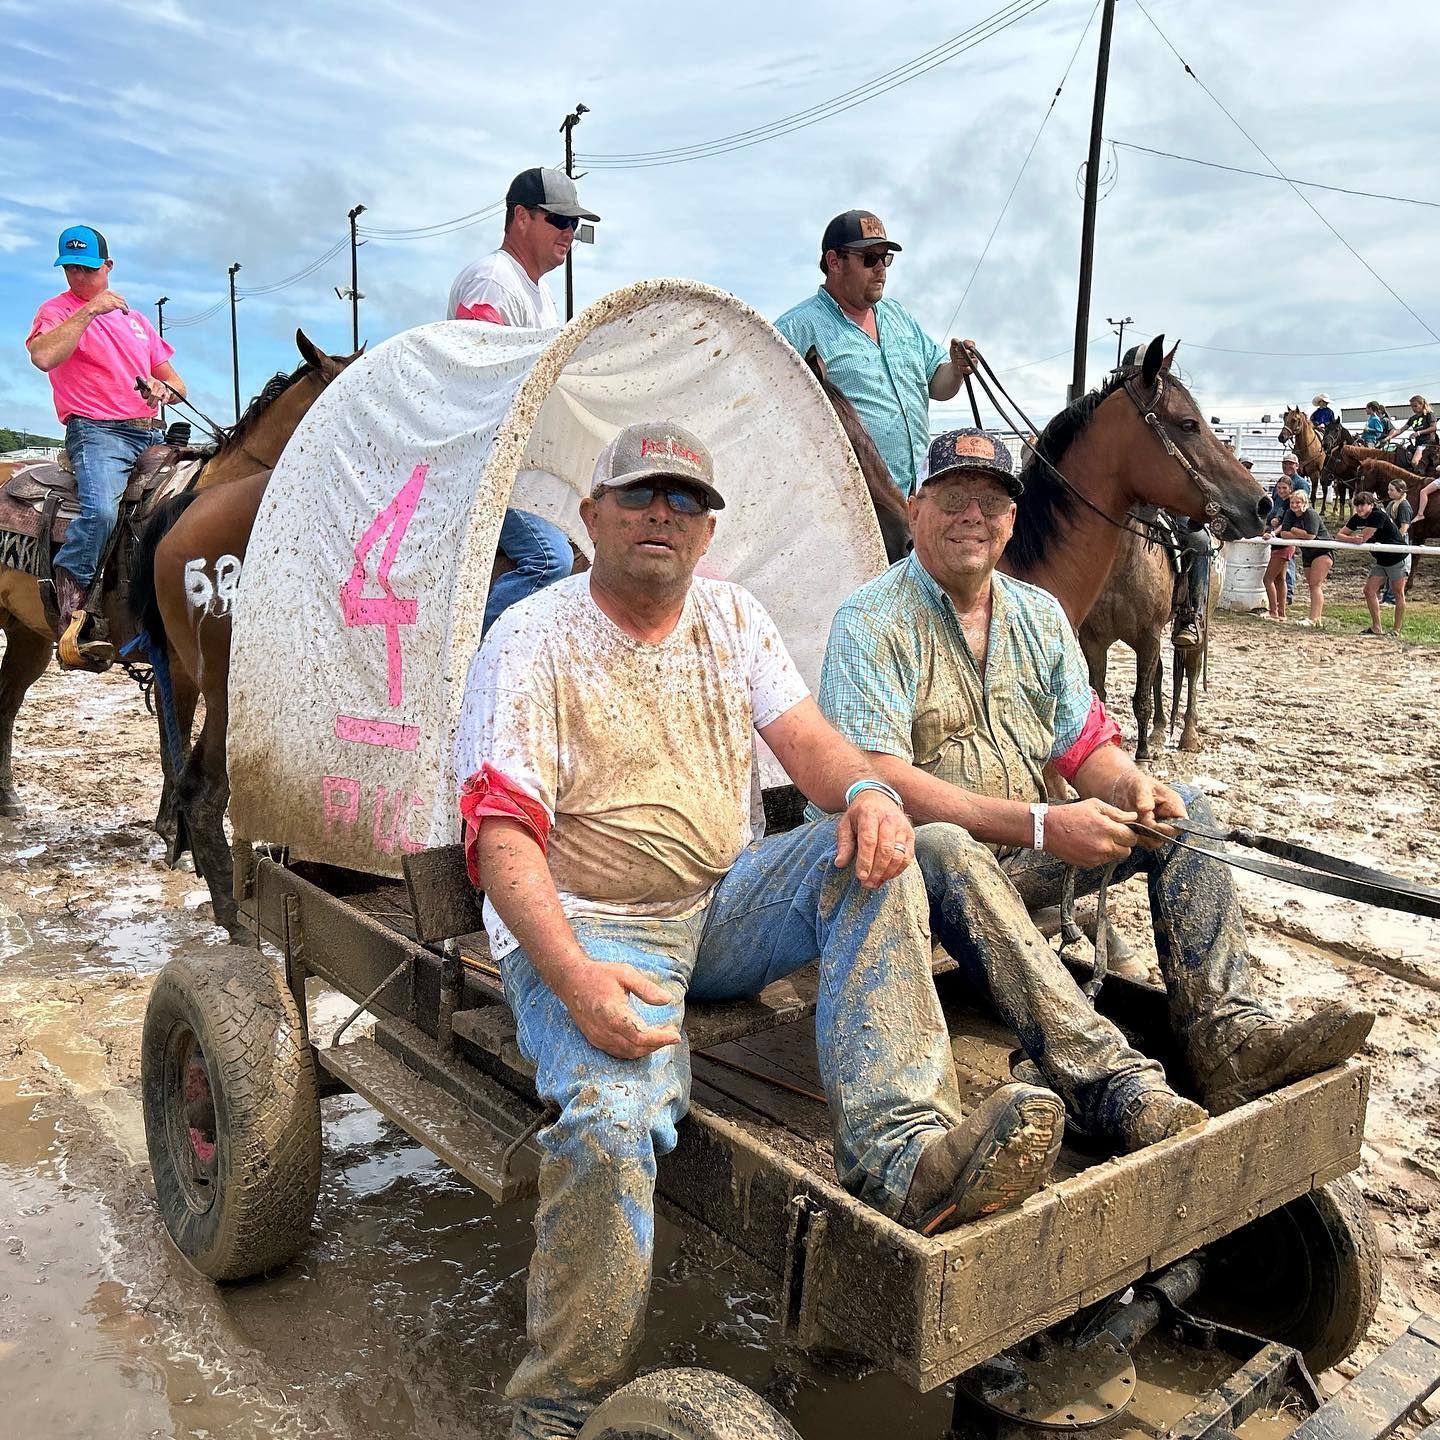 World's Largest Amateur Rodeo: world record in Pawhuska, Oklahoma